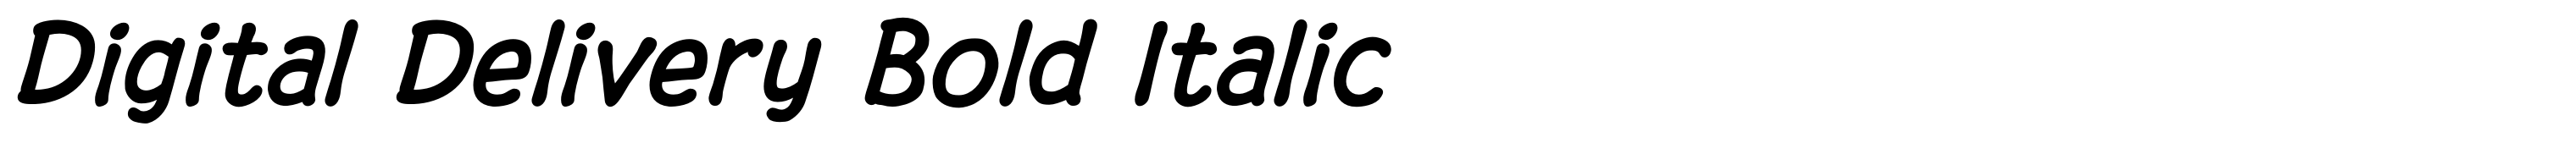 Digital Delivery Bold Italic